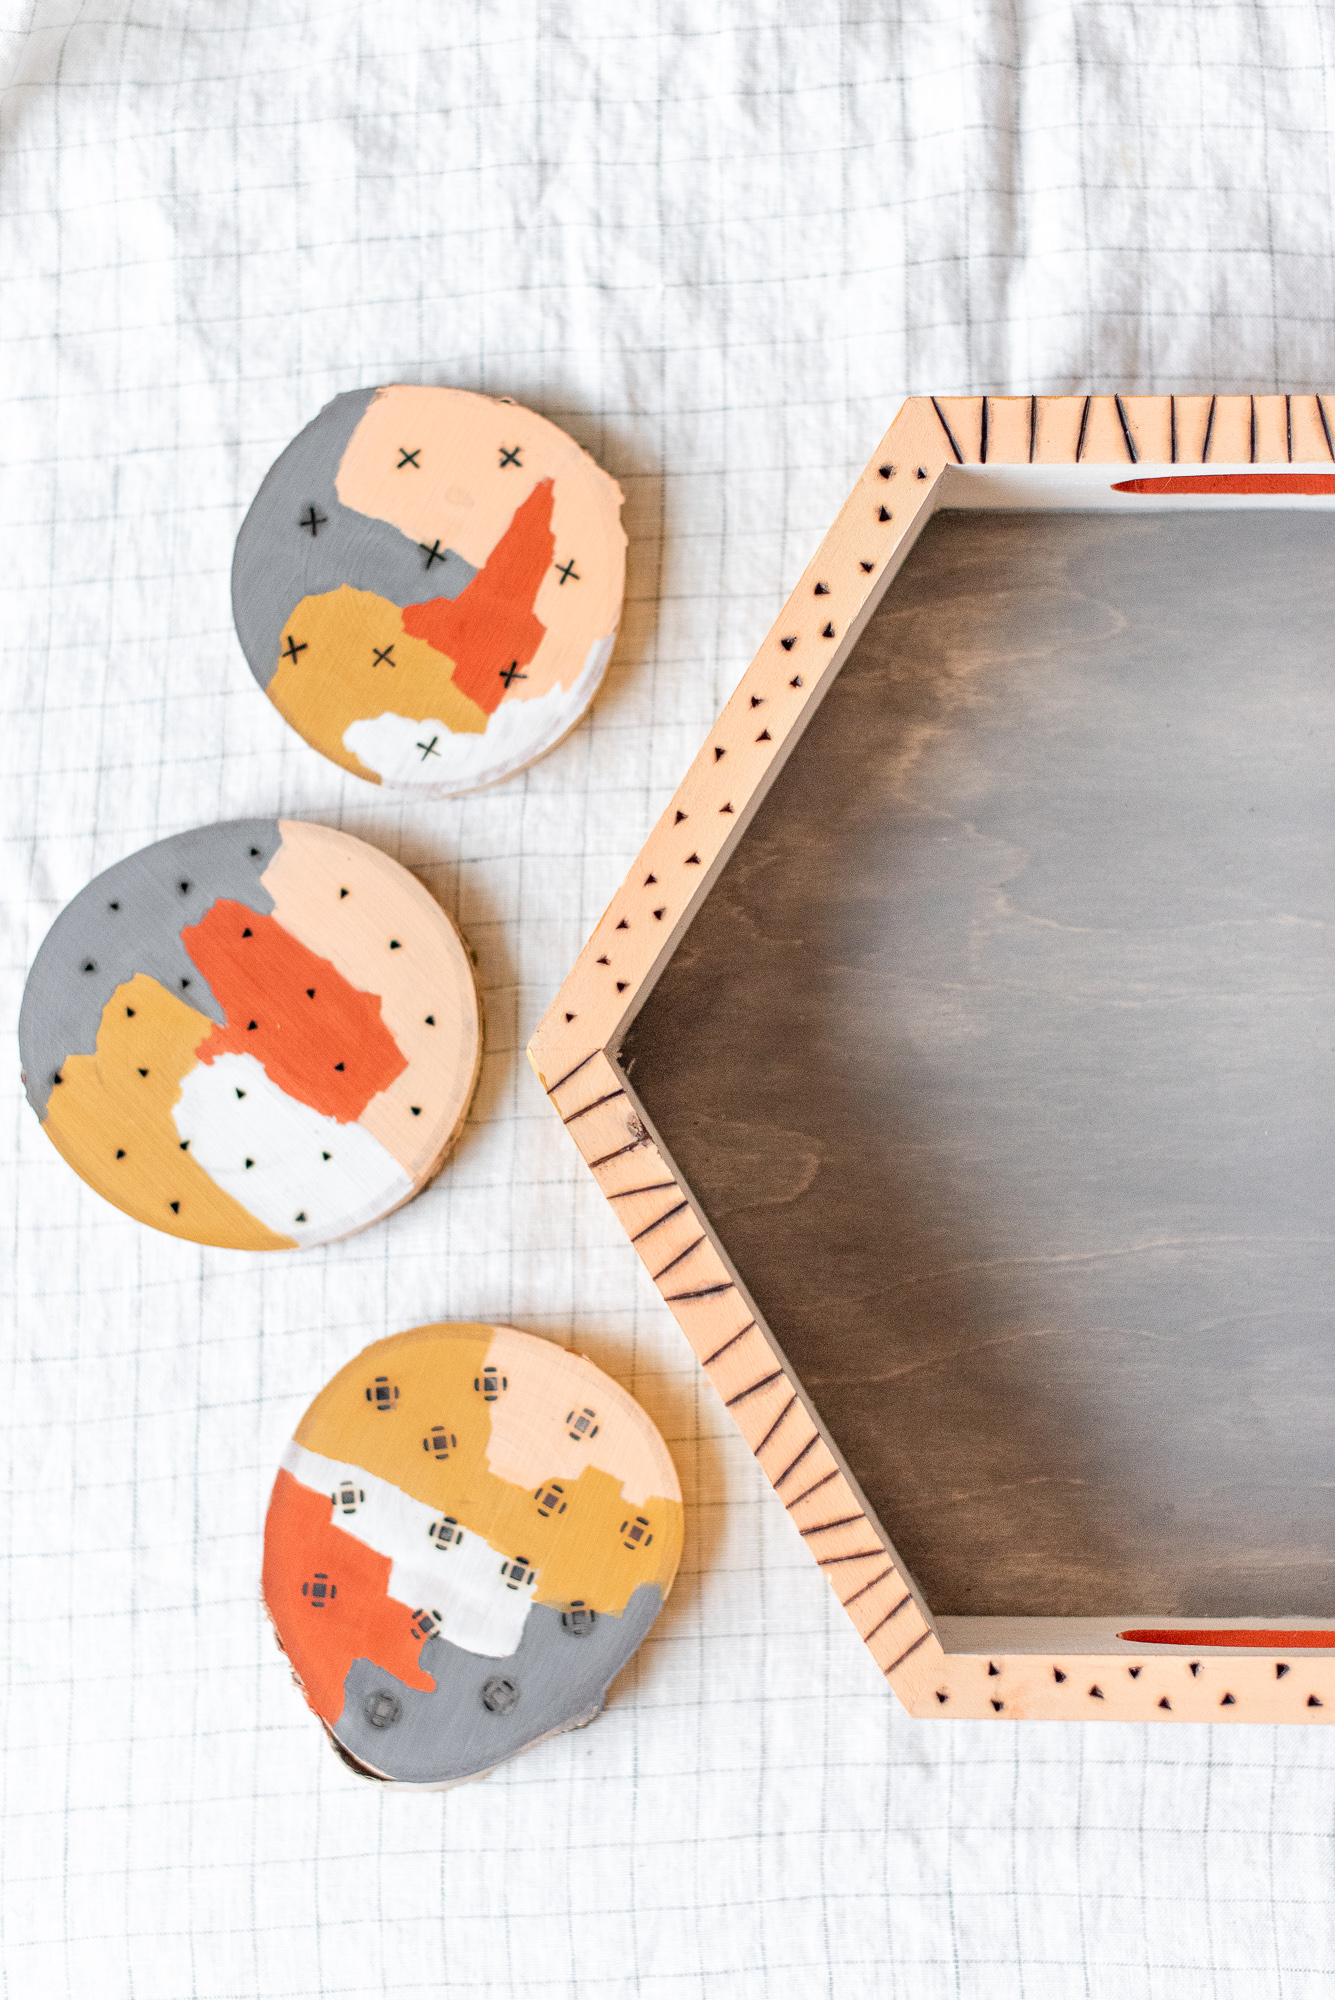 DIY wooden wood burned and painted bar tray and coaster set Dear Handmade Life